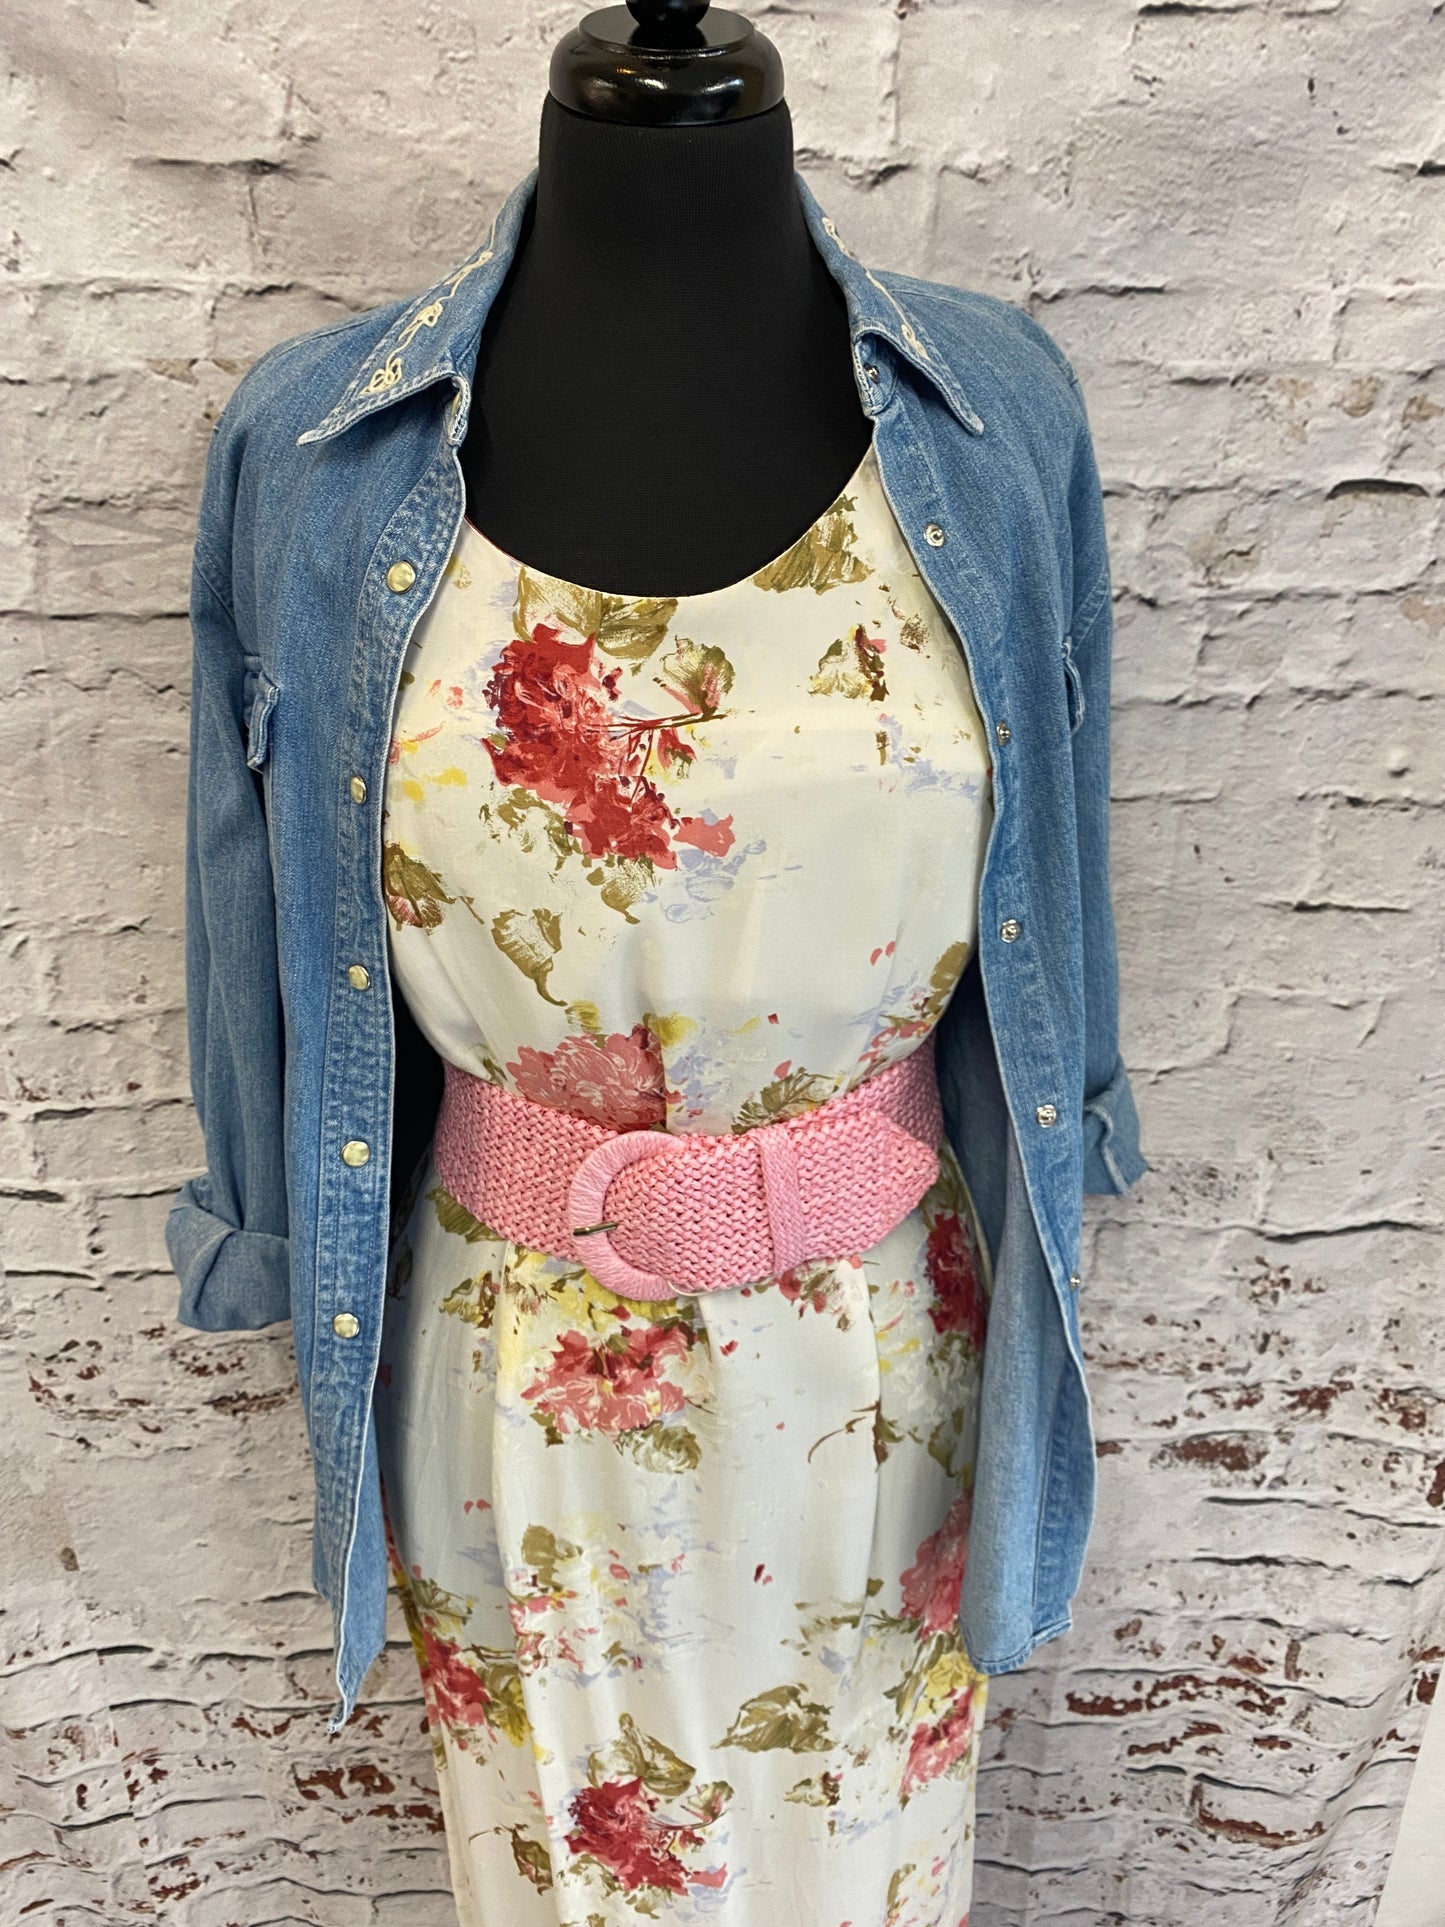 Ladies Cream and Peach Floral Print Dress Size 12